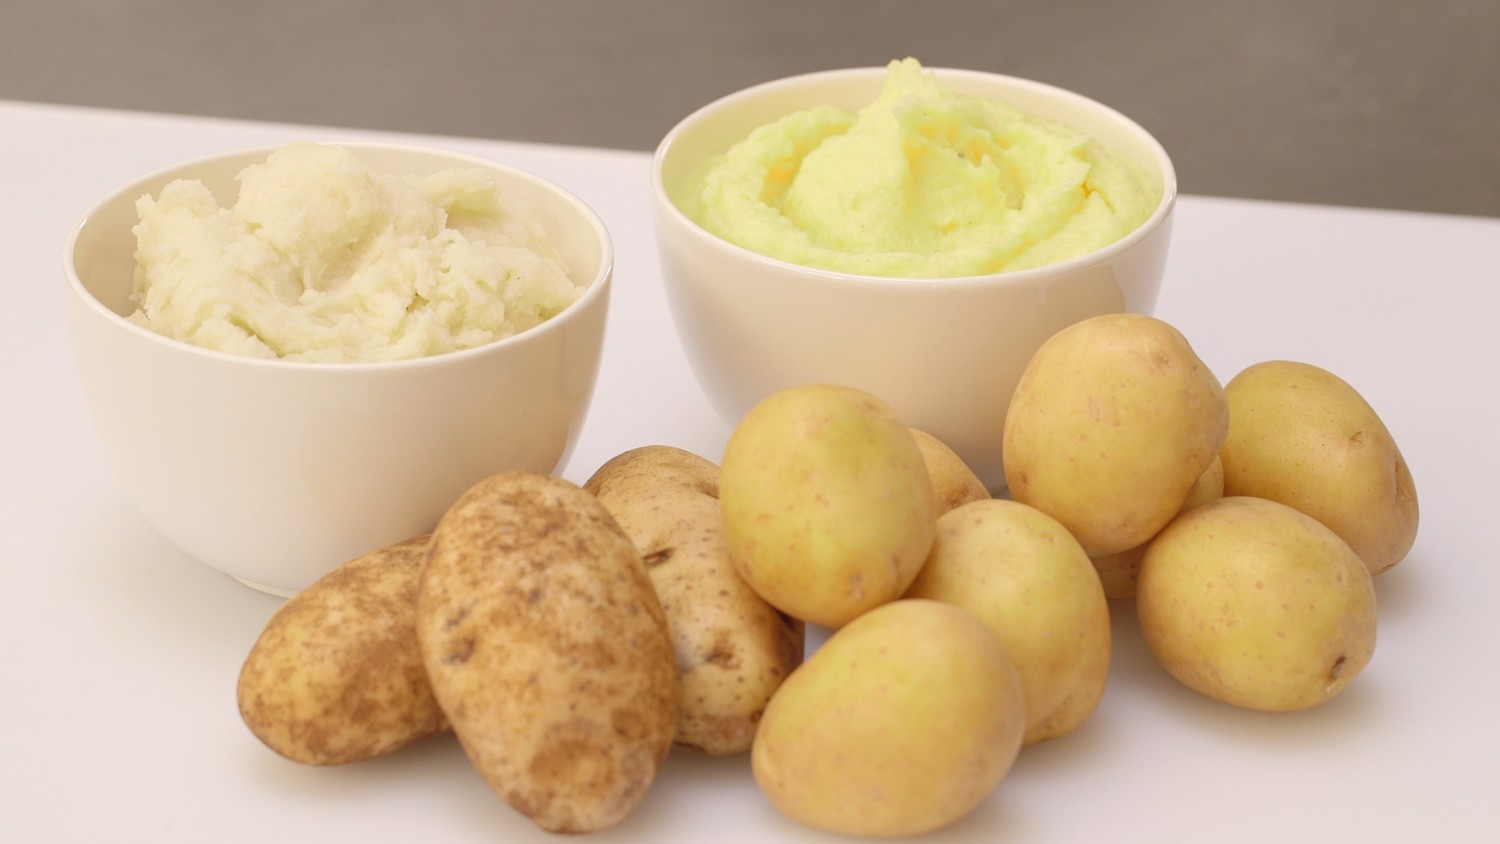 Rice potato. Картофельное пюре. МР картофель. Dry Mashed Potatoes. Lumpy Potatoes food.